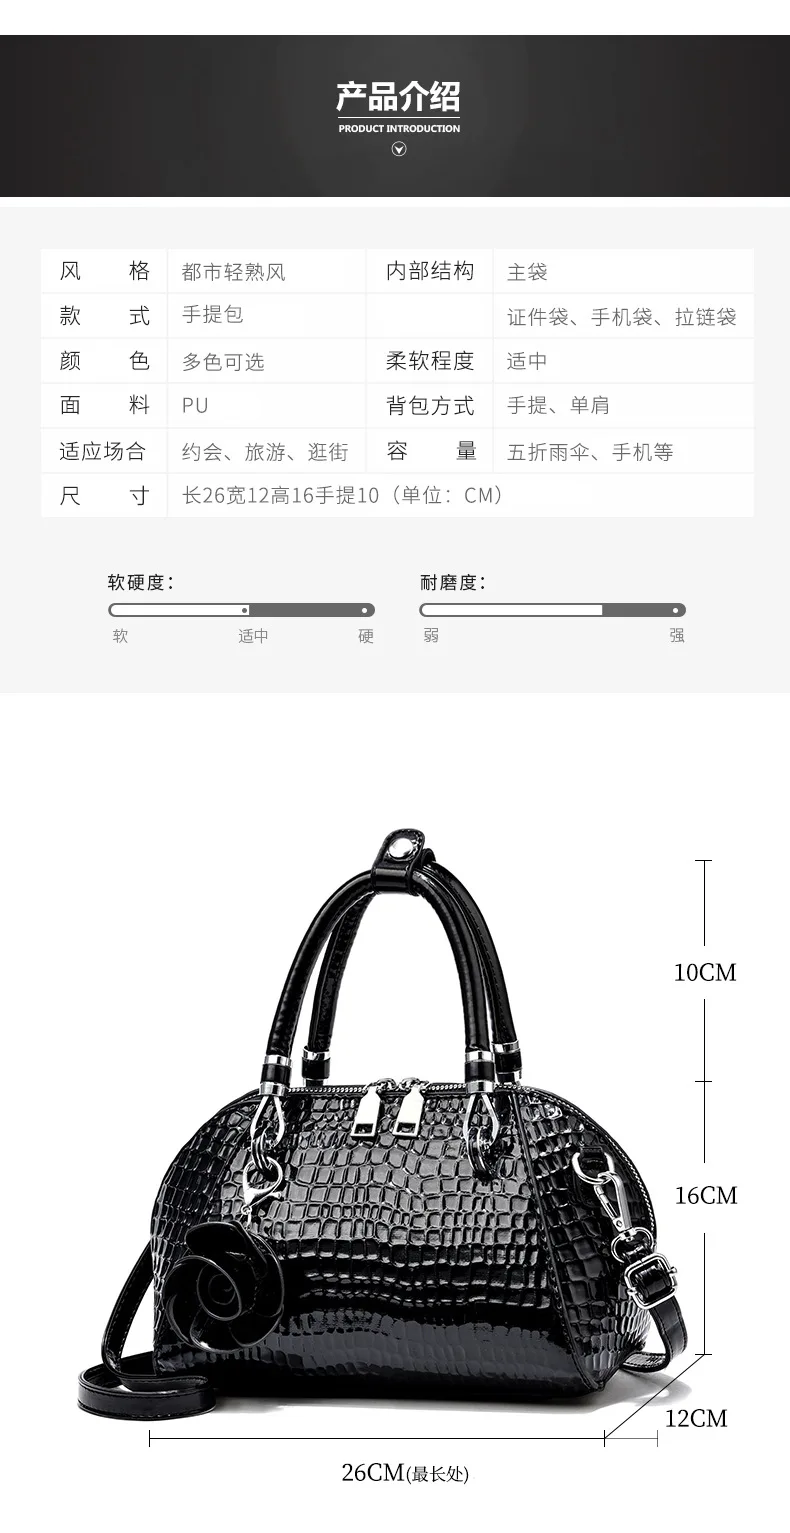 Snake Grain Handbags For Women Luxury Pu Fashion Women Bags Flower Pendant Ladies Hand Bag Handbags